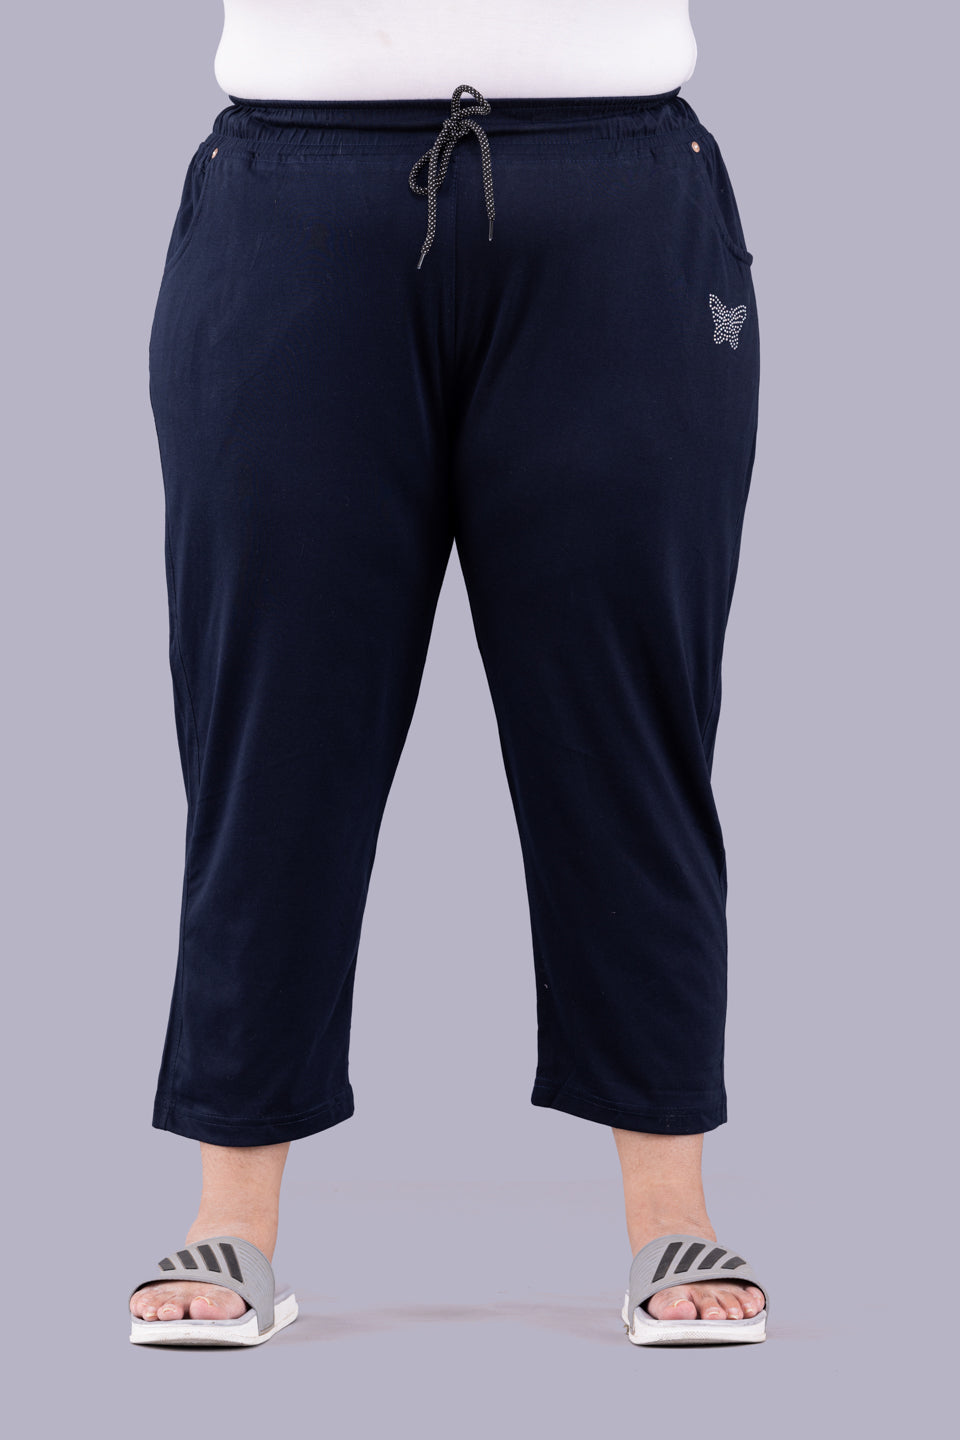 Cotton Capris For Women - Half Capri Pants - Teal Blue at Rs 695.00, Millar Ganj, Ludhiana